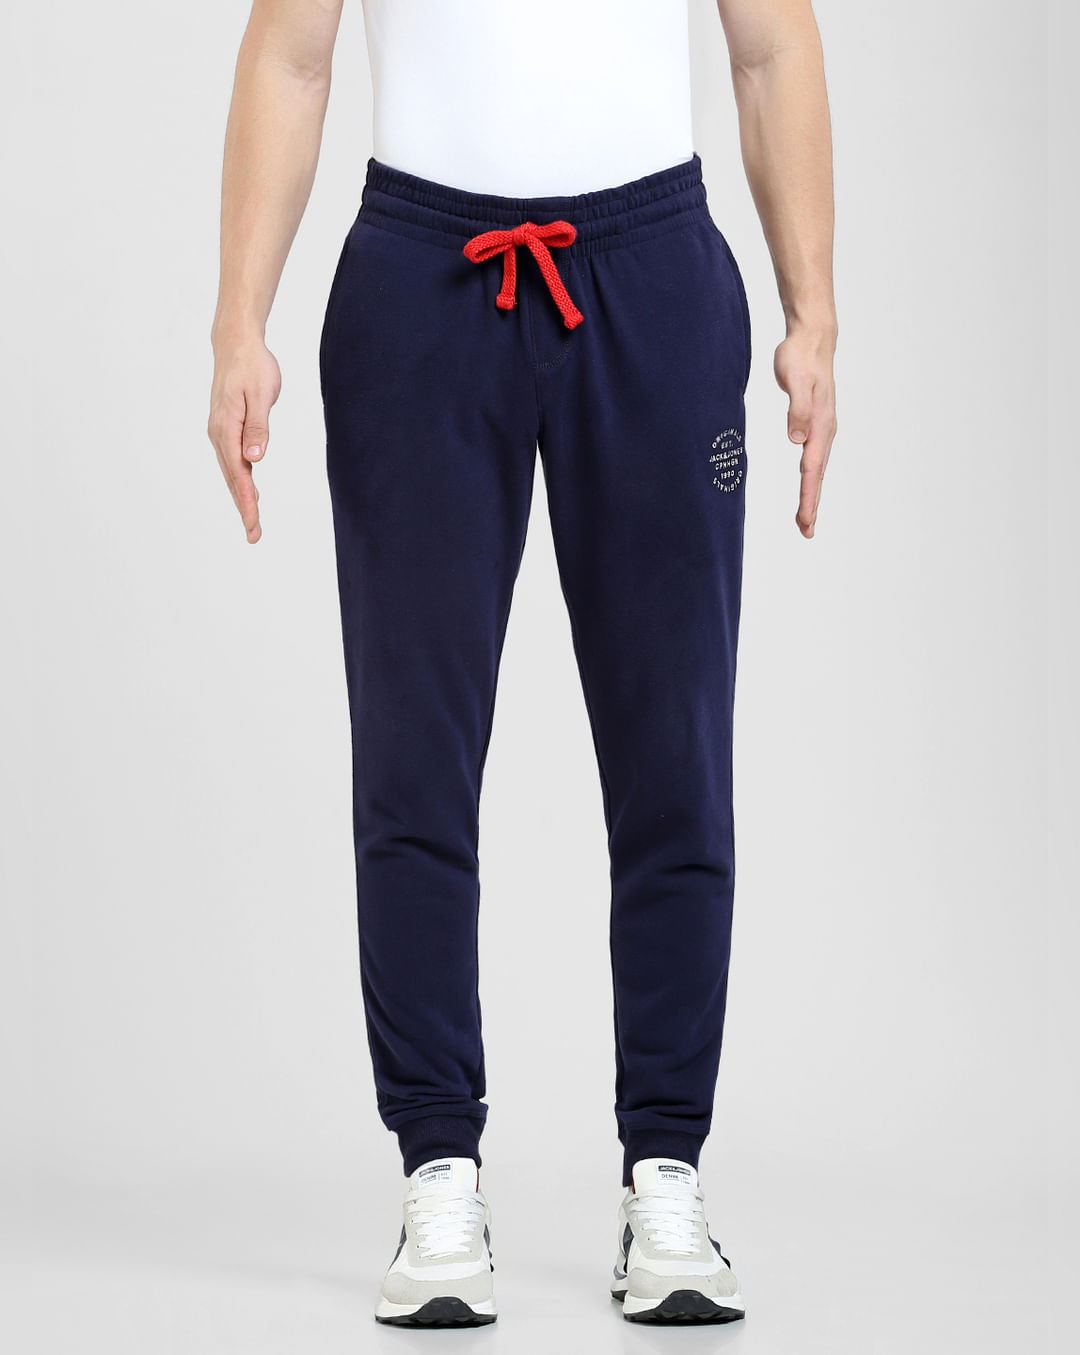 Buy Navy Blue Drawstring Sweatpants for Men